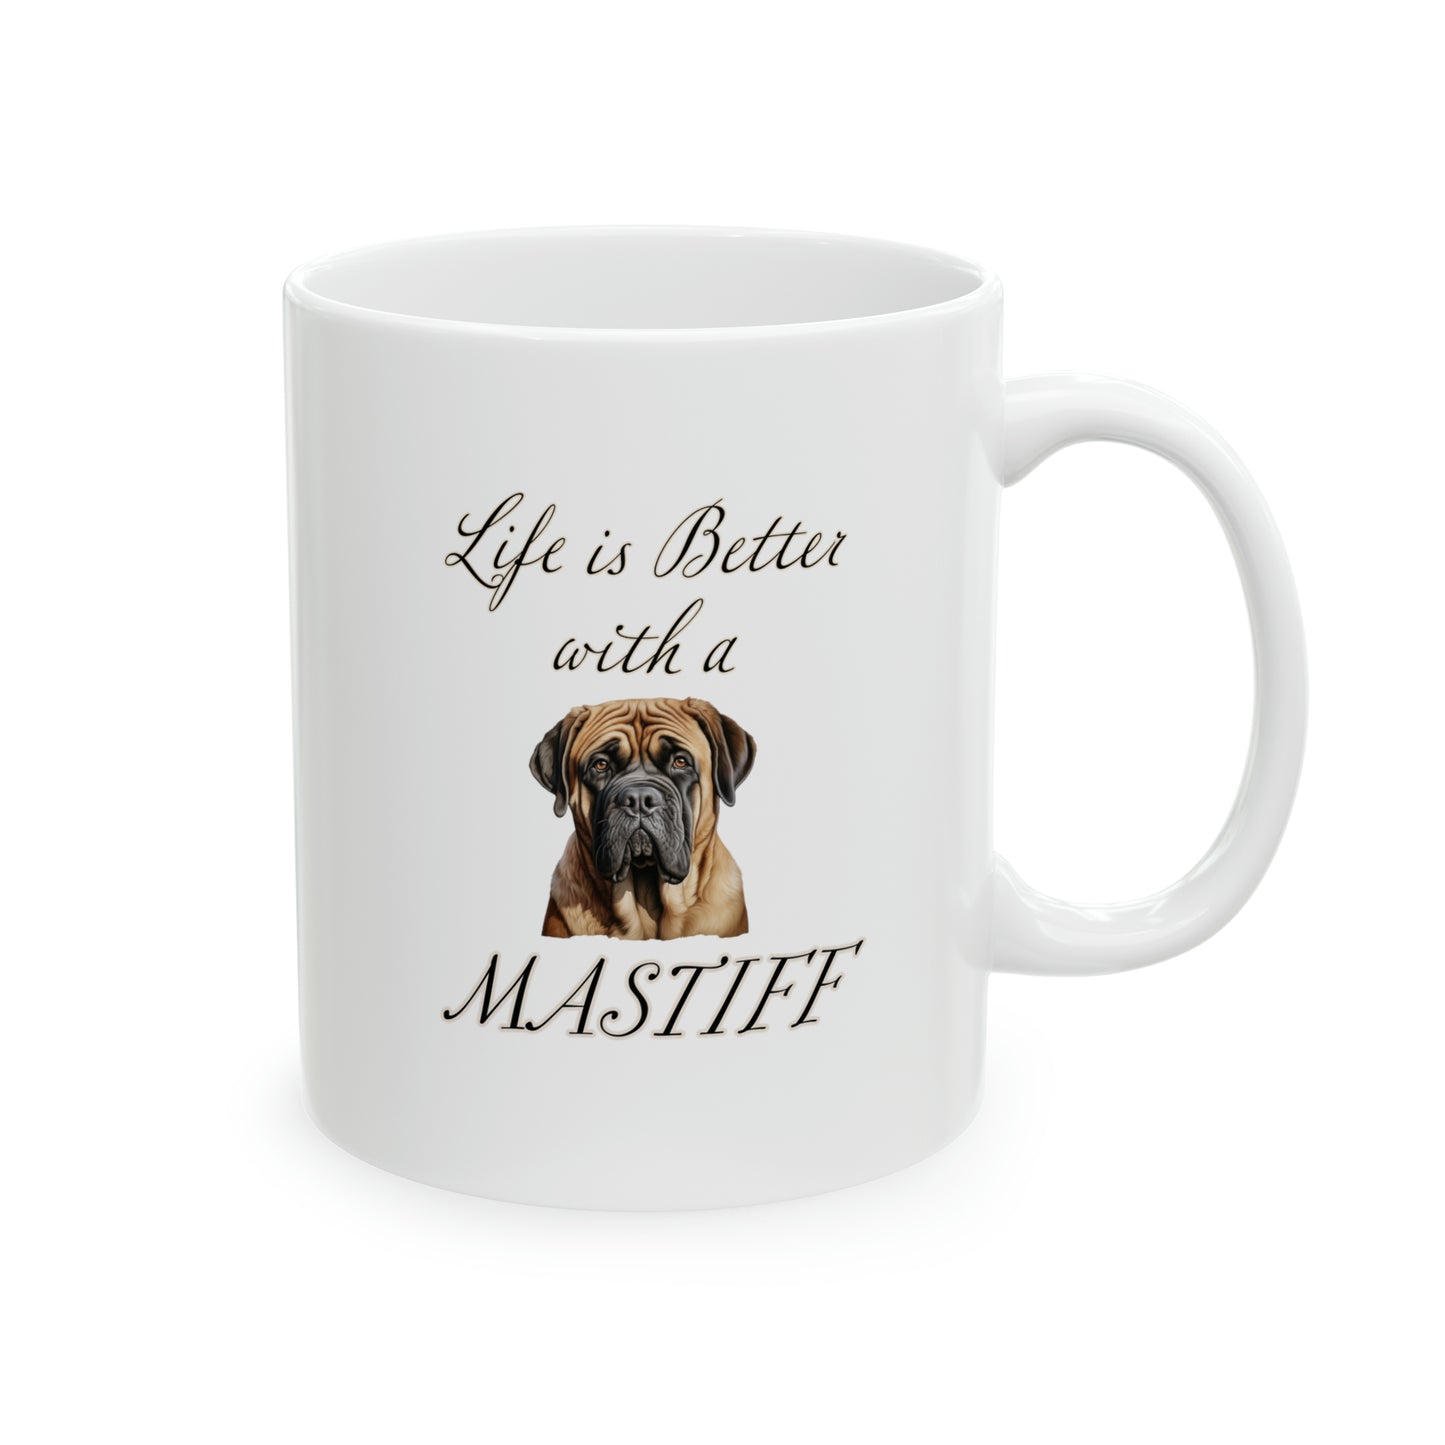 Mastiff Mug - 11 oz - Life is Better with a Mastiff